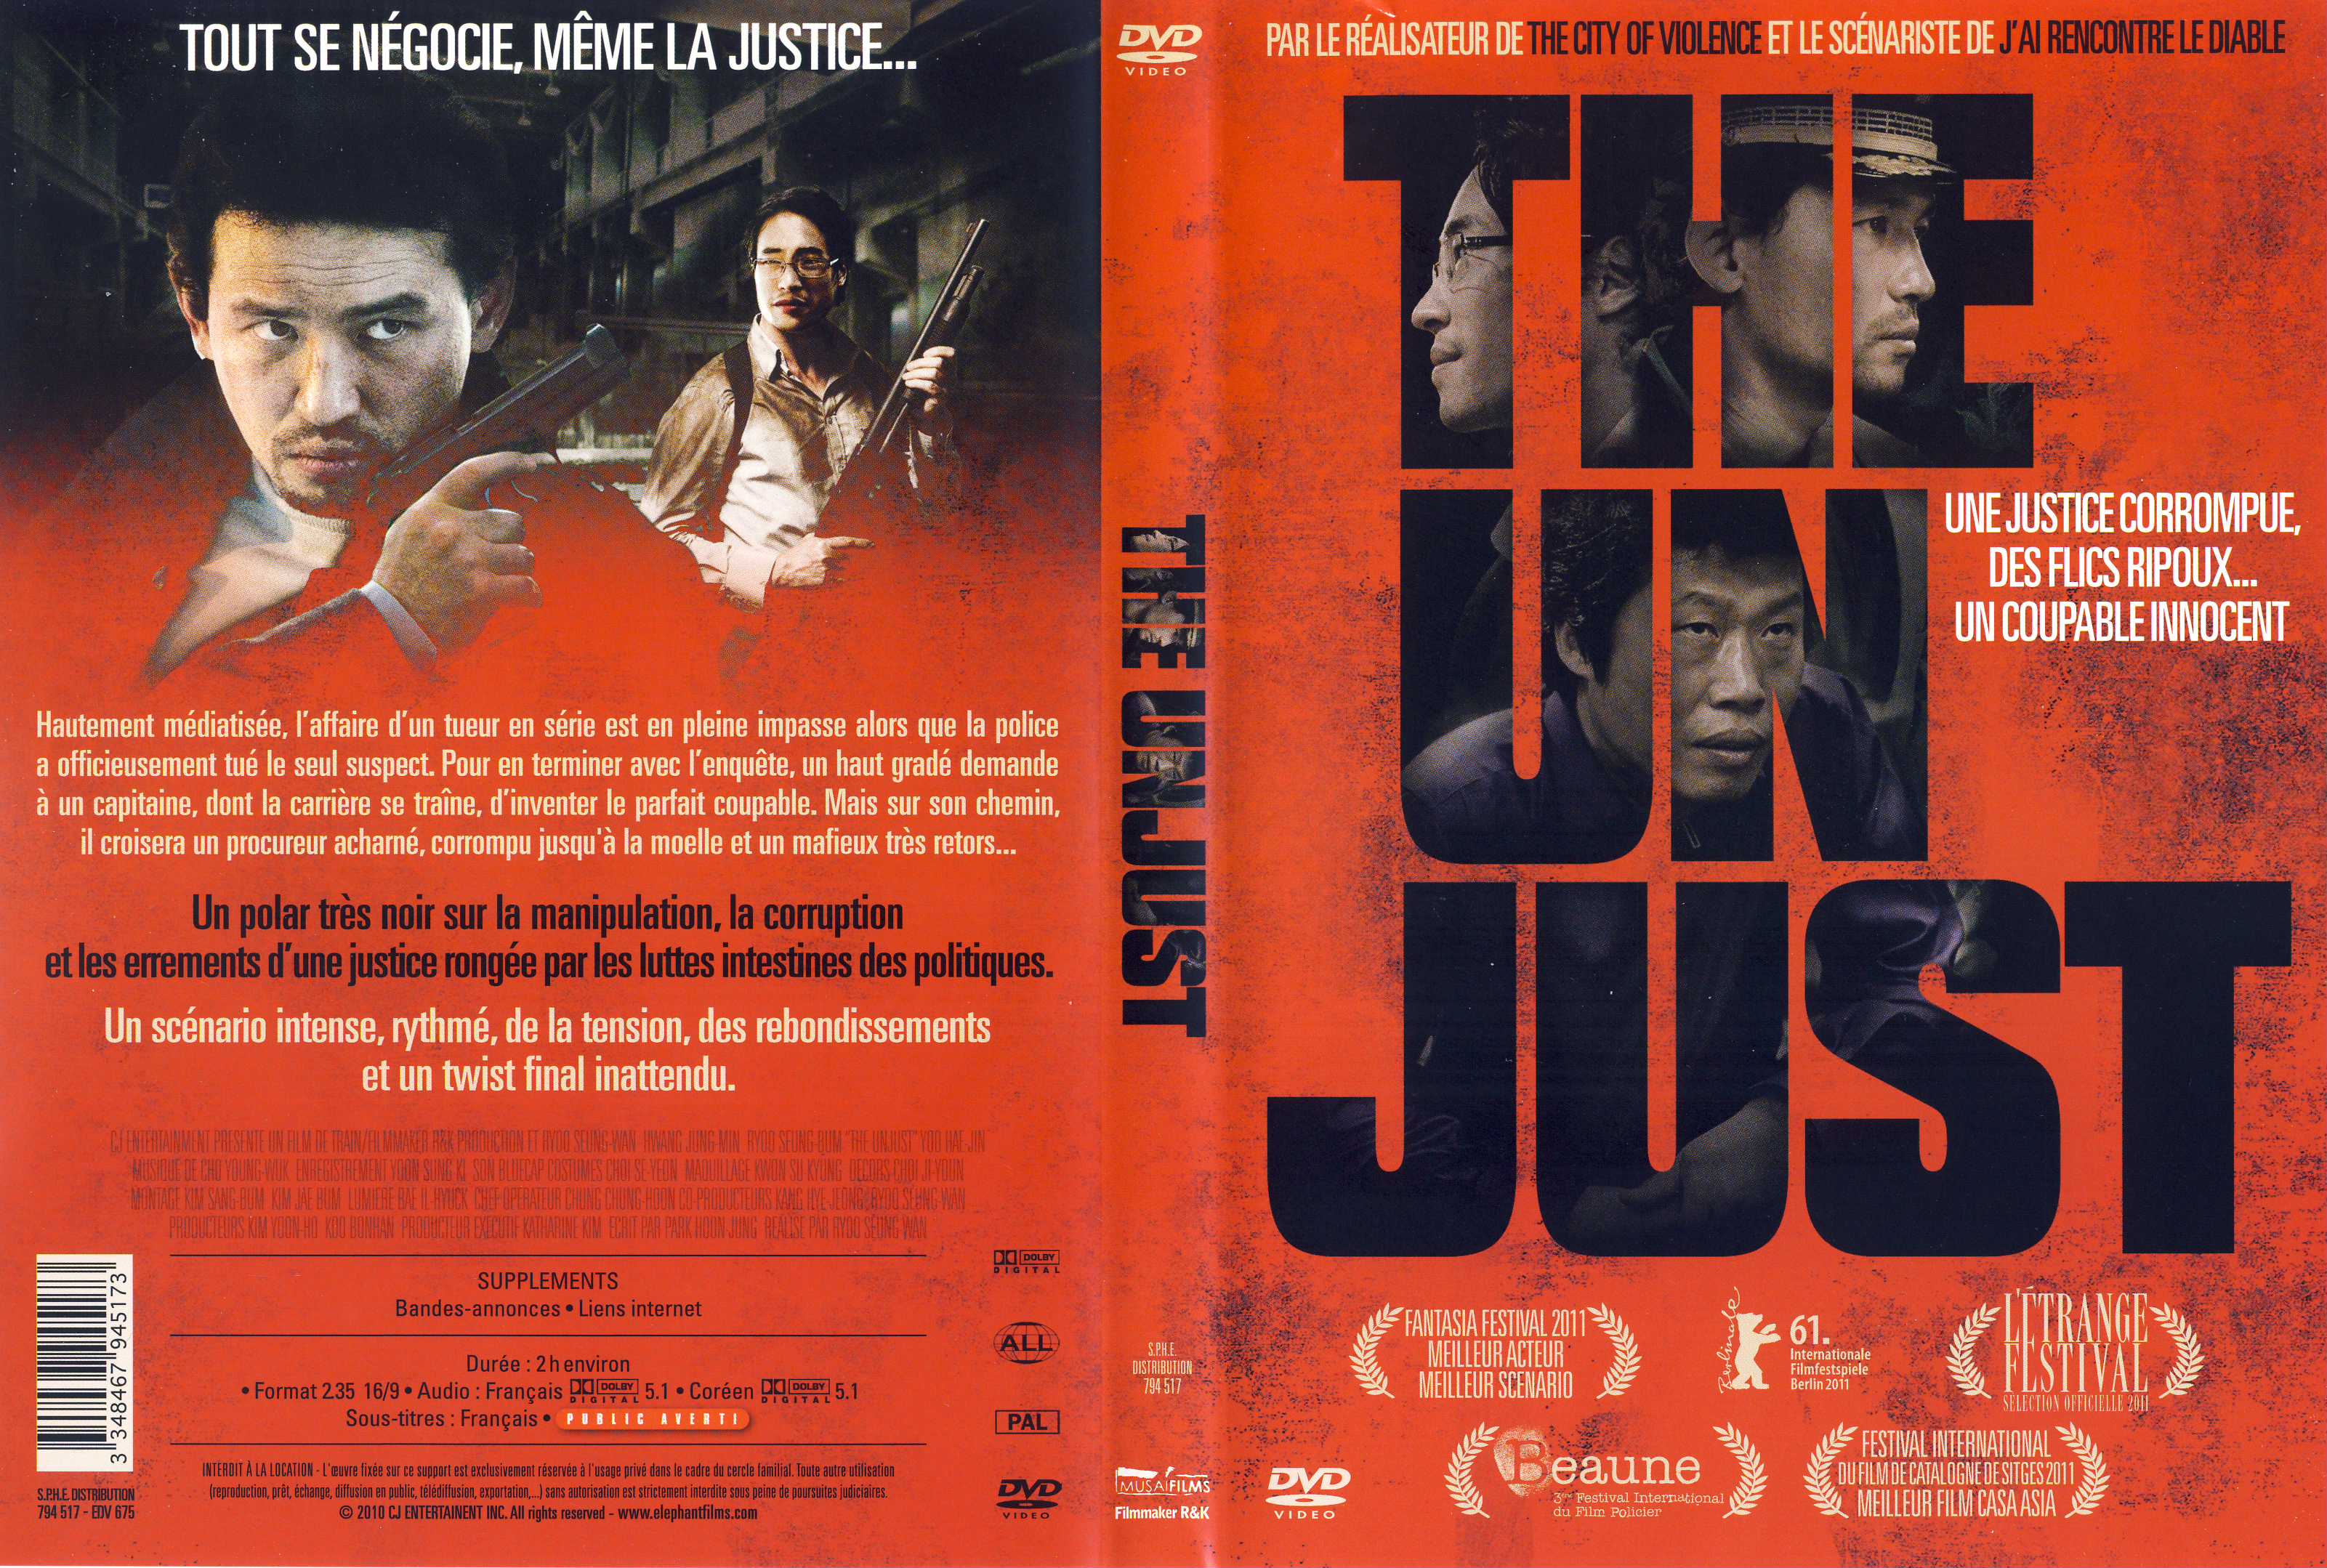 Jaquette DVD The unjust